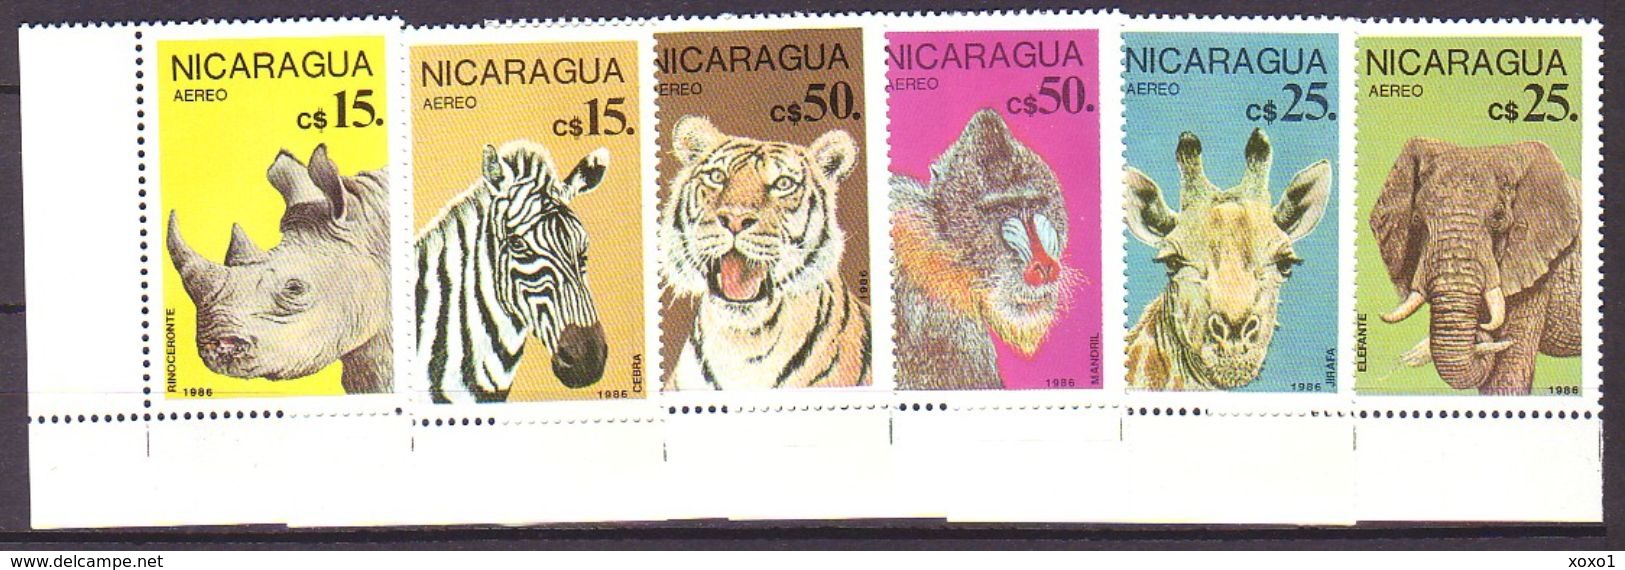 Nicaragua 1986 MiNr. 2711 - 2716 Animals Tiere 6v MNH** 6,00 € - Rhinocéros